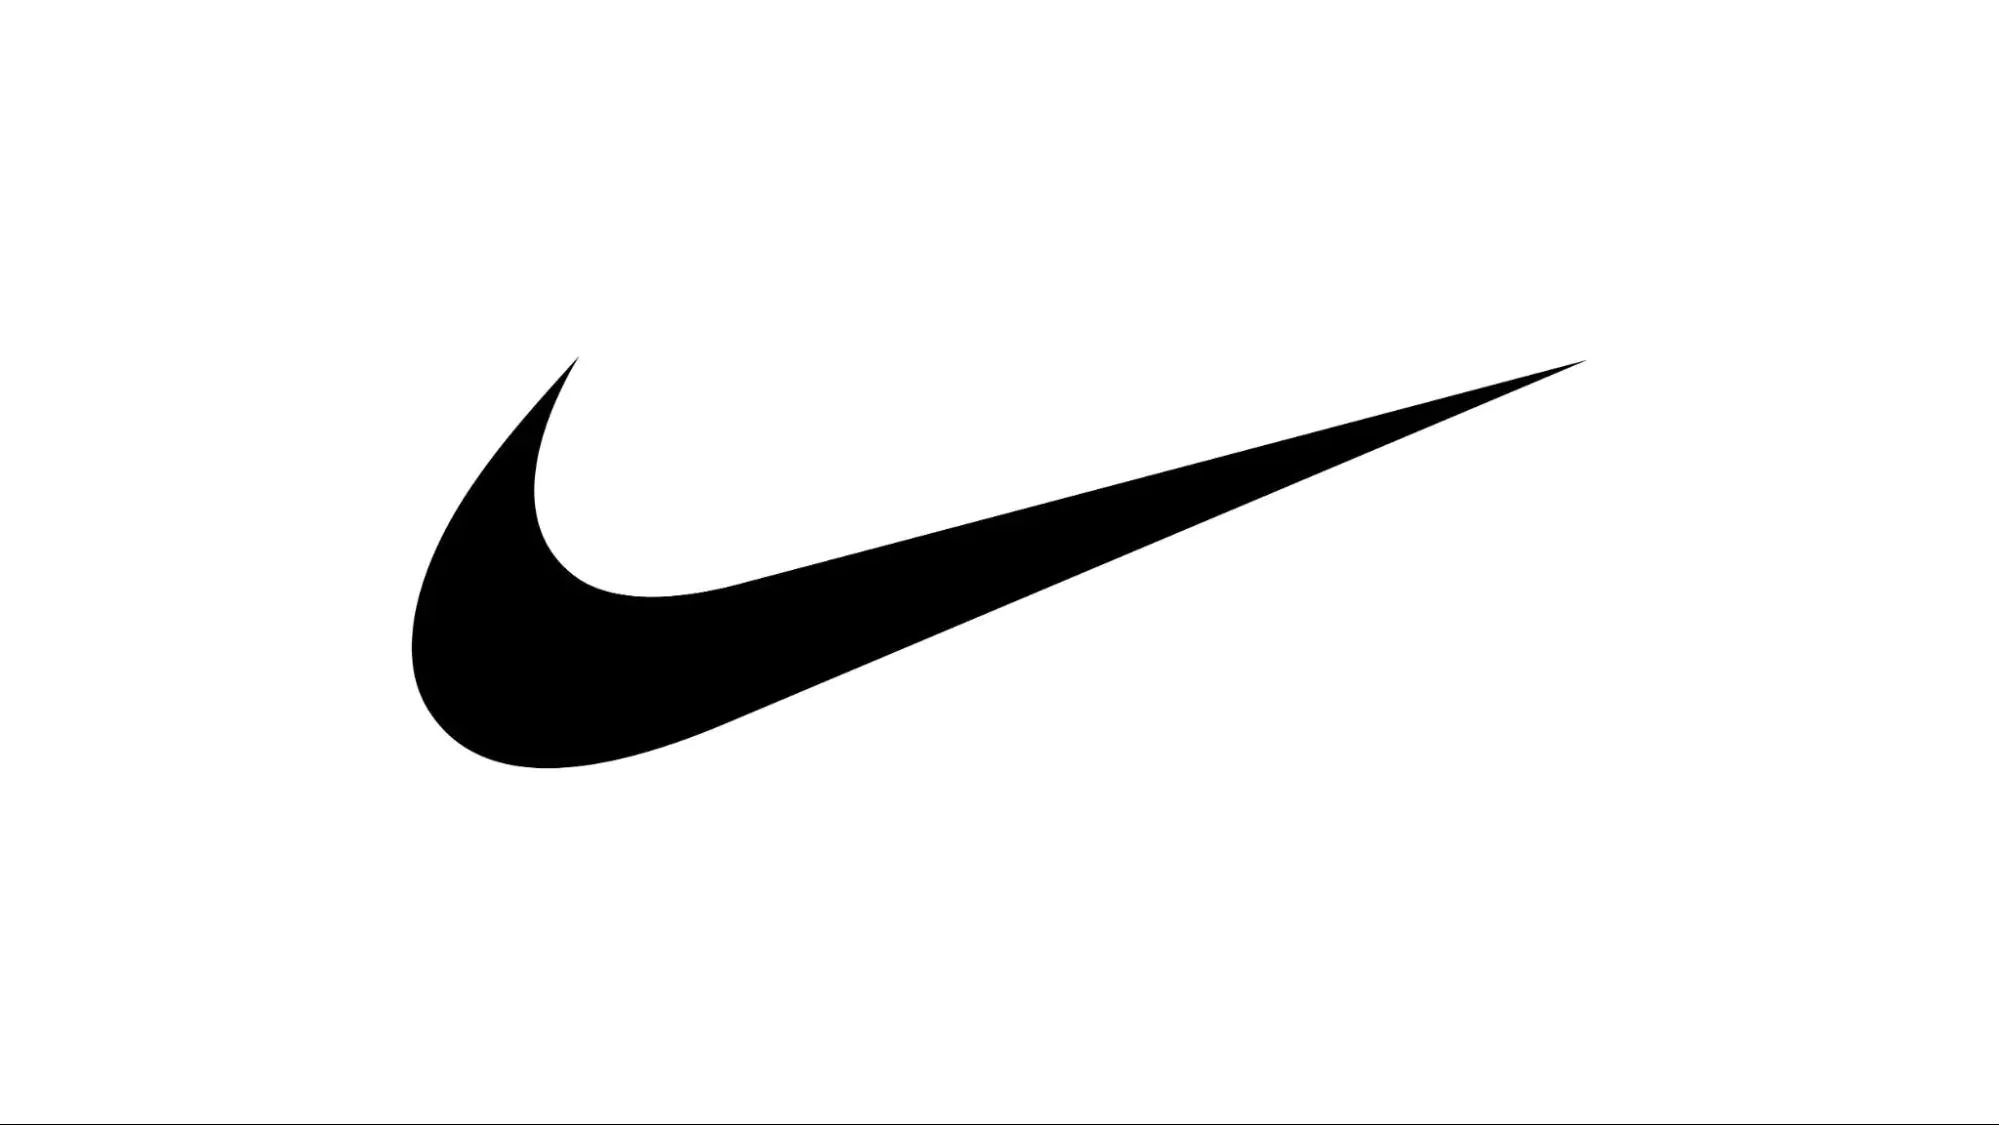 Logotipo "swoosh" de Nike en negro